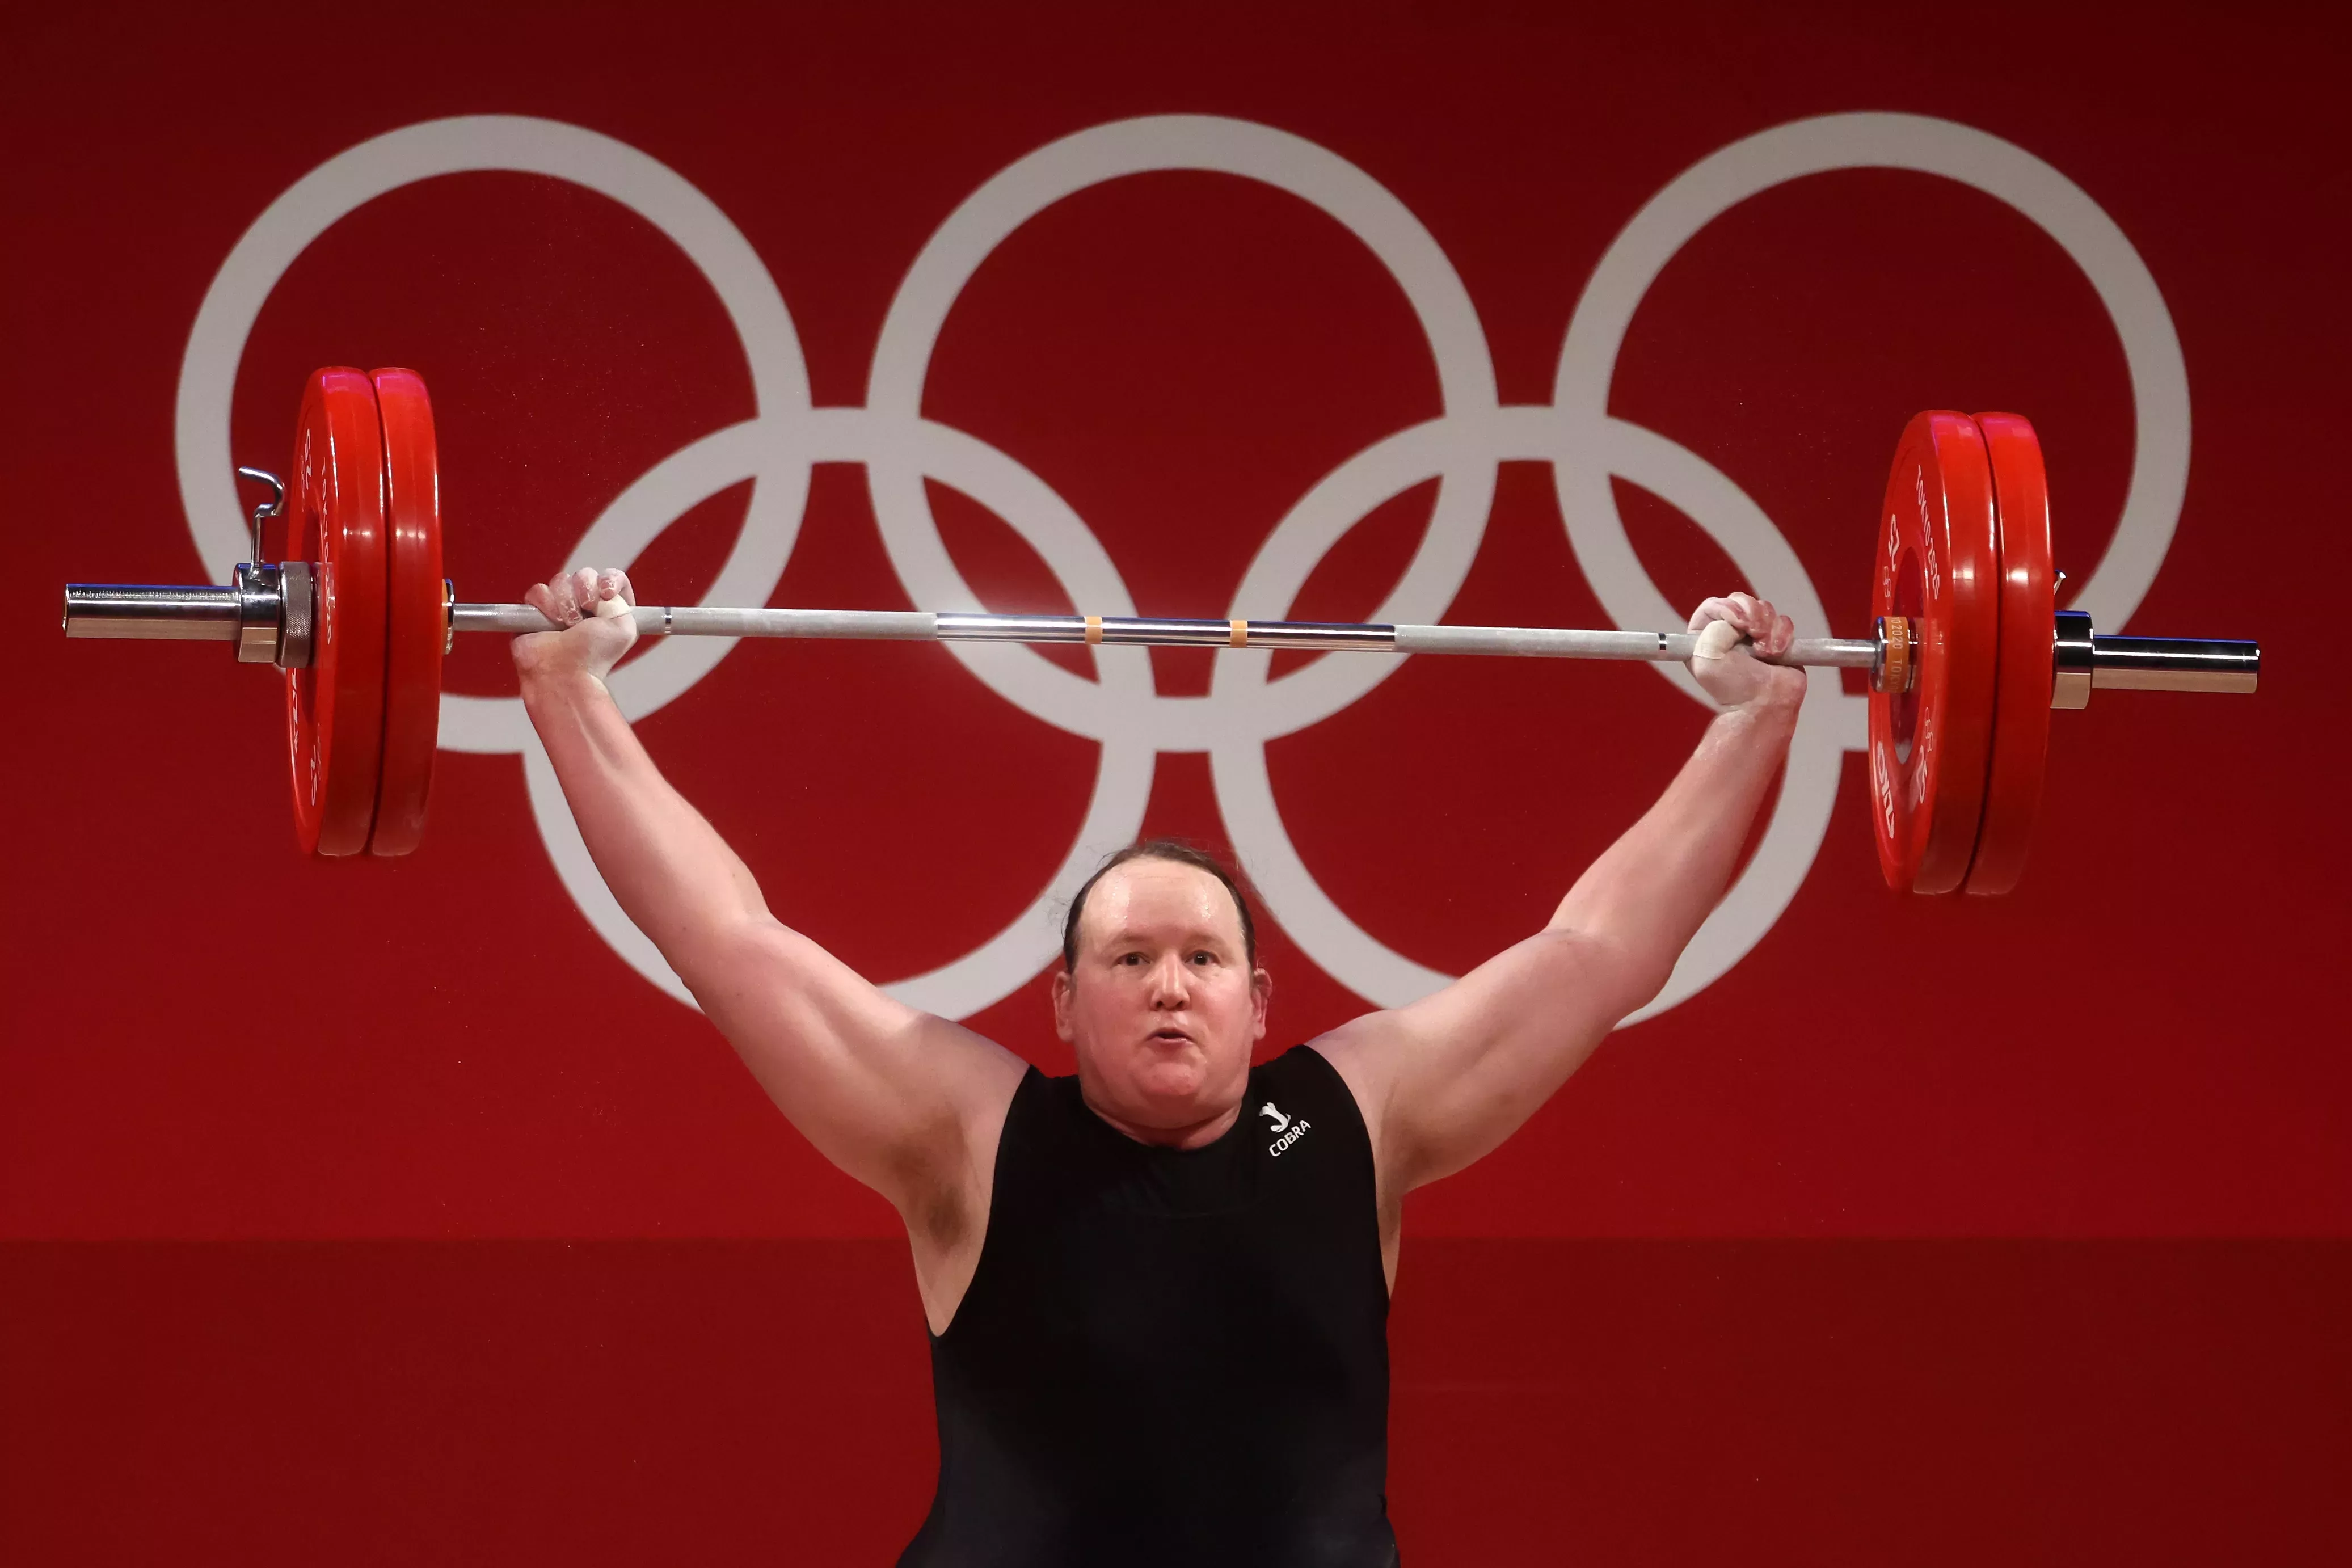 El atletismo mundial no prohíbe a los atletas trans, pero les dificulta competir